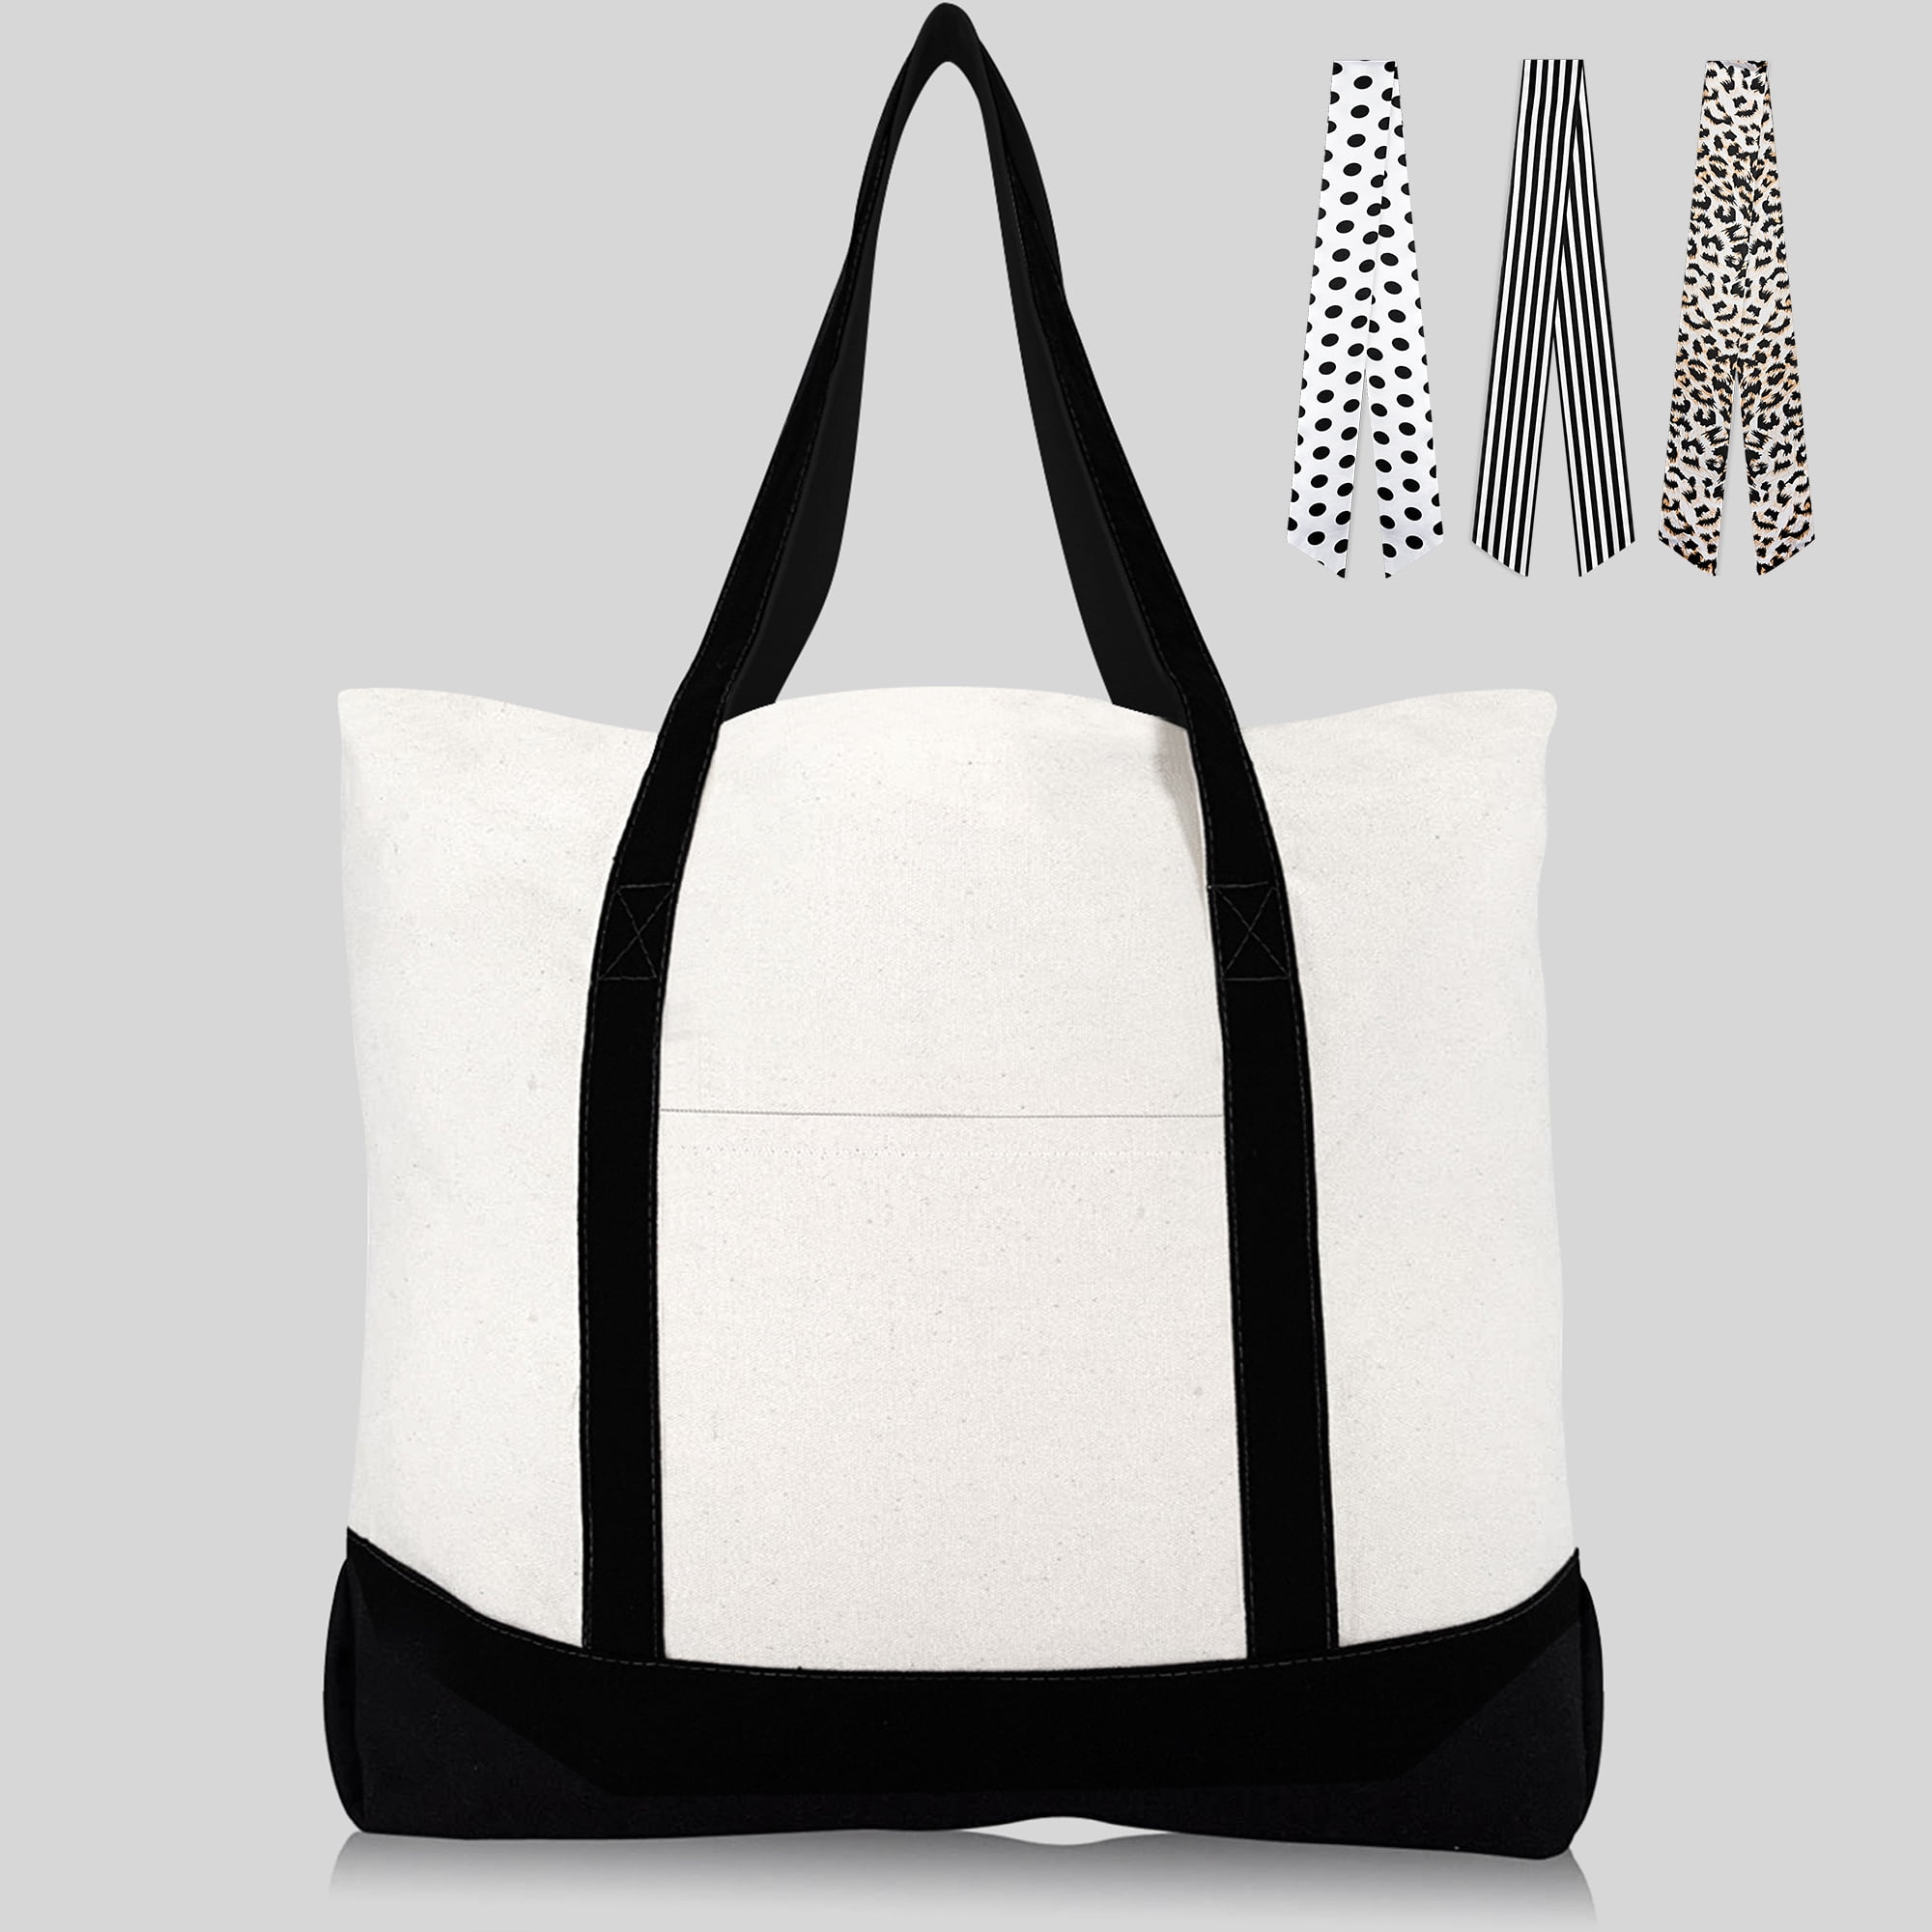 Canvas tote bag with zipper cotton bag for women women tote bag durable fashionable bag with pocket reusable teacher tote bag